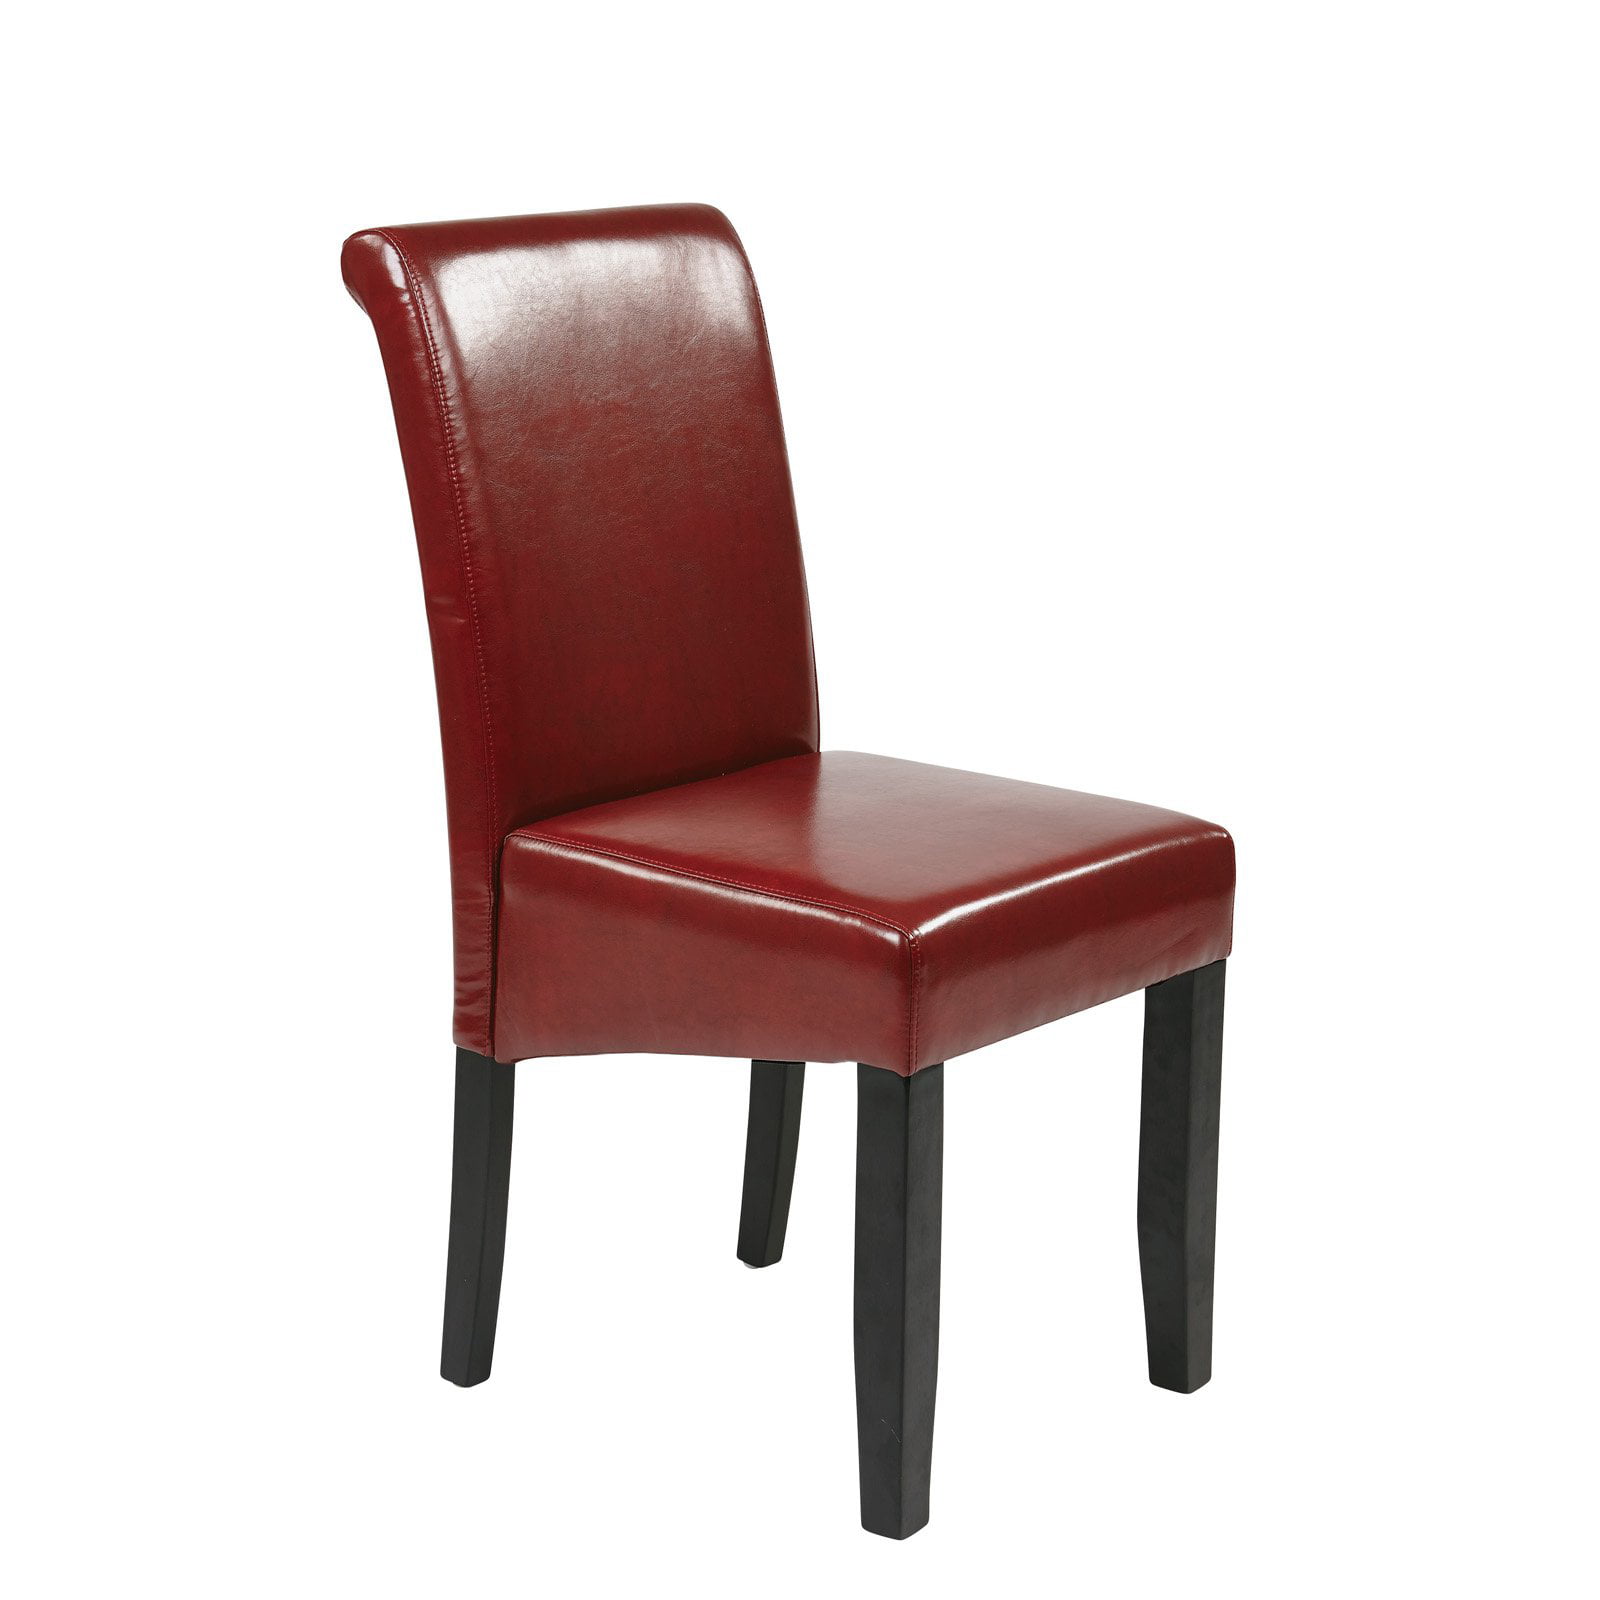 Parsons Chair, Crimson Red Leather - Walmart.com - Walmart.com